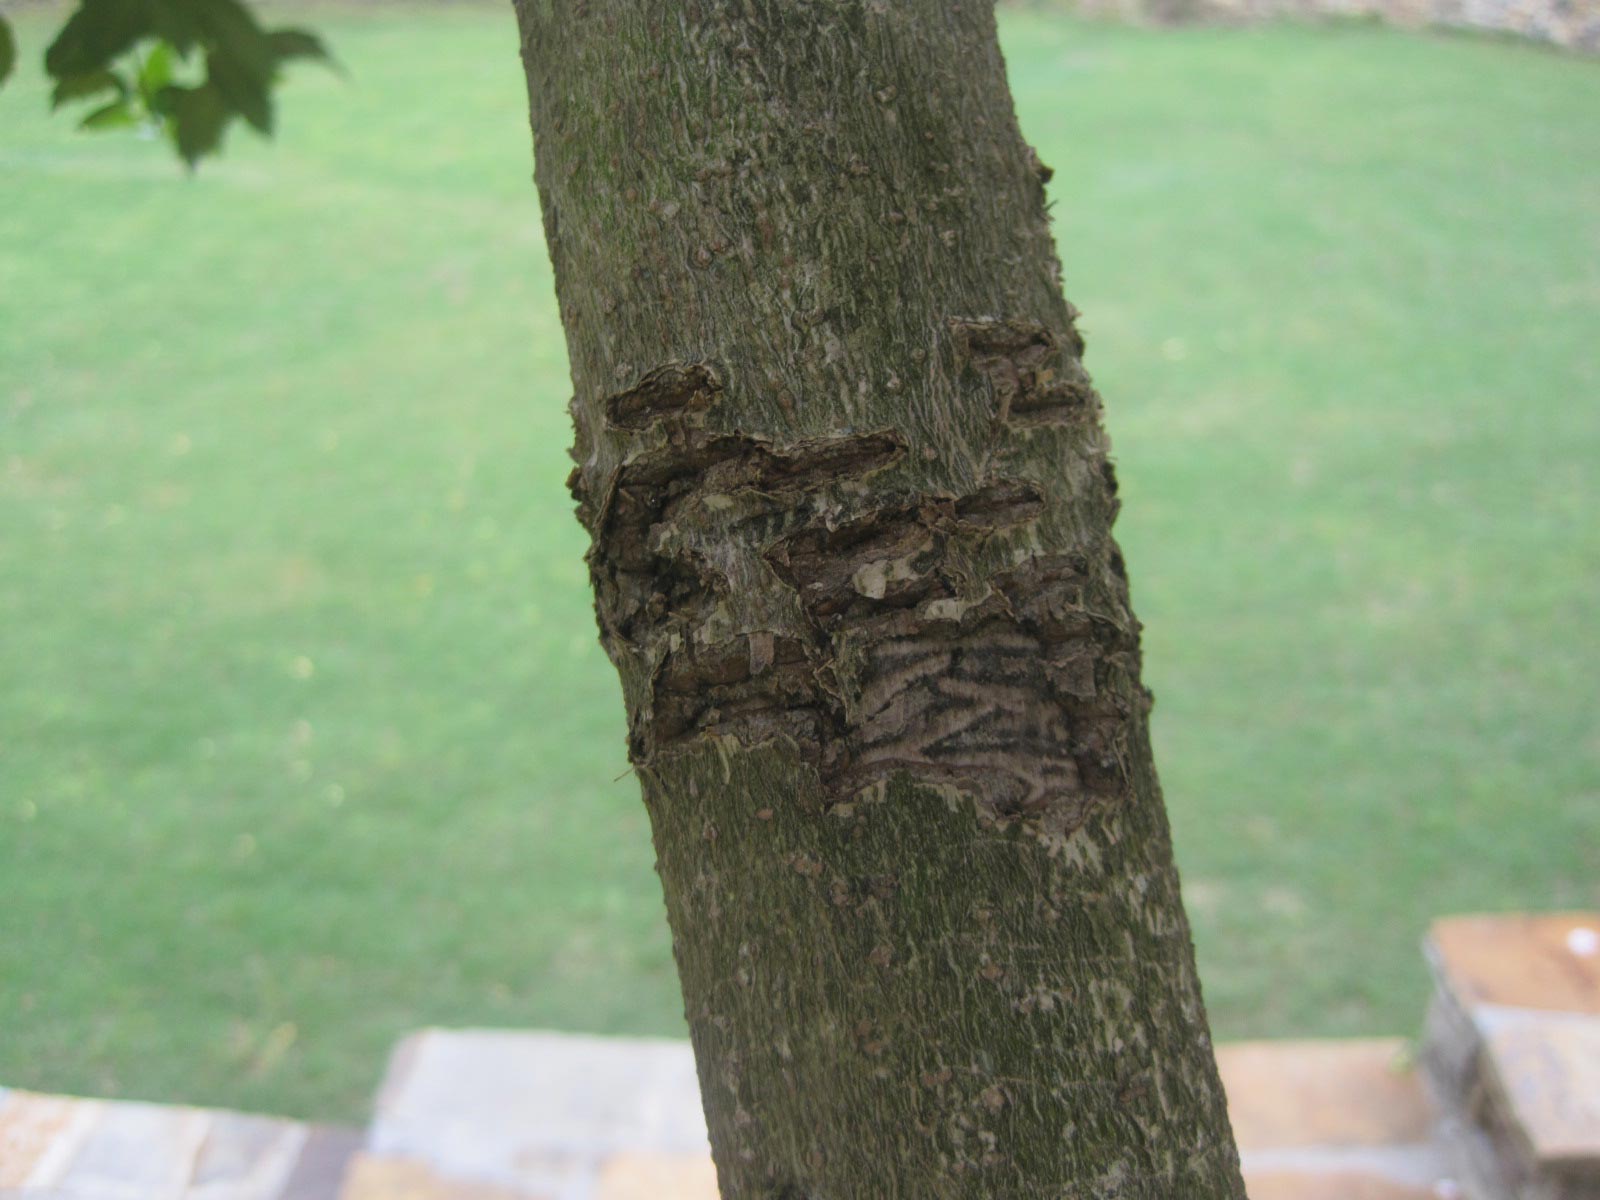 European hornet damage